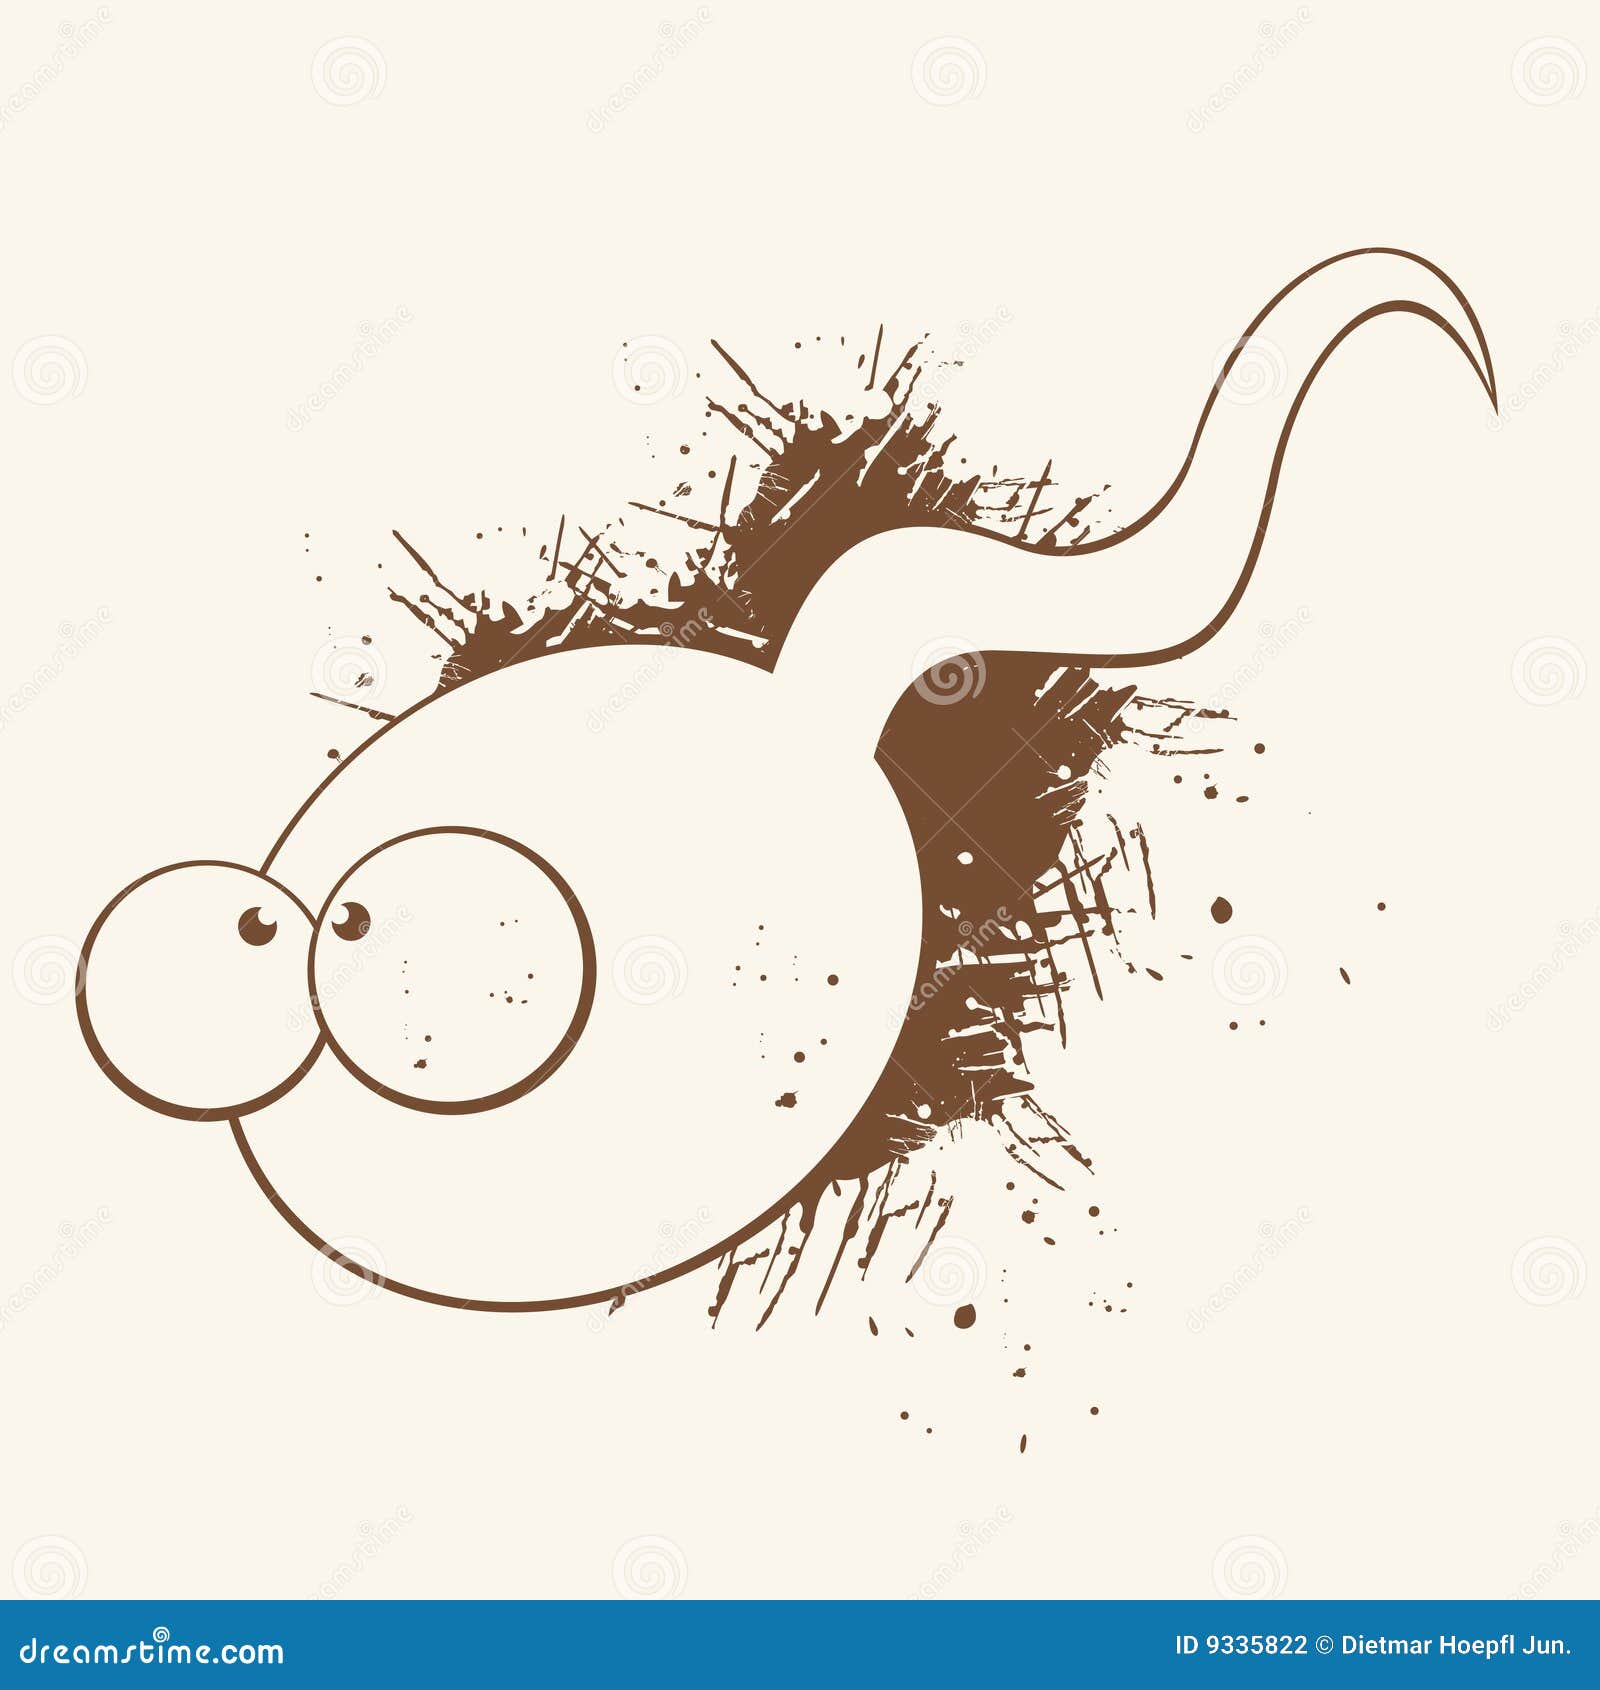 A cartoon character sperm swimming. 